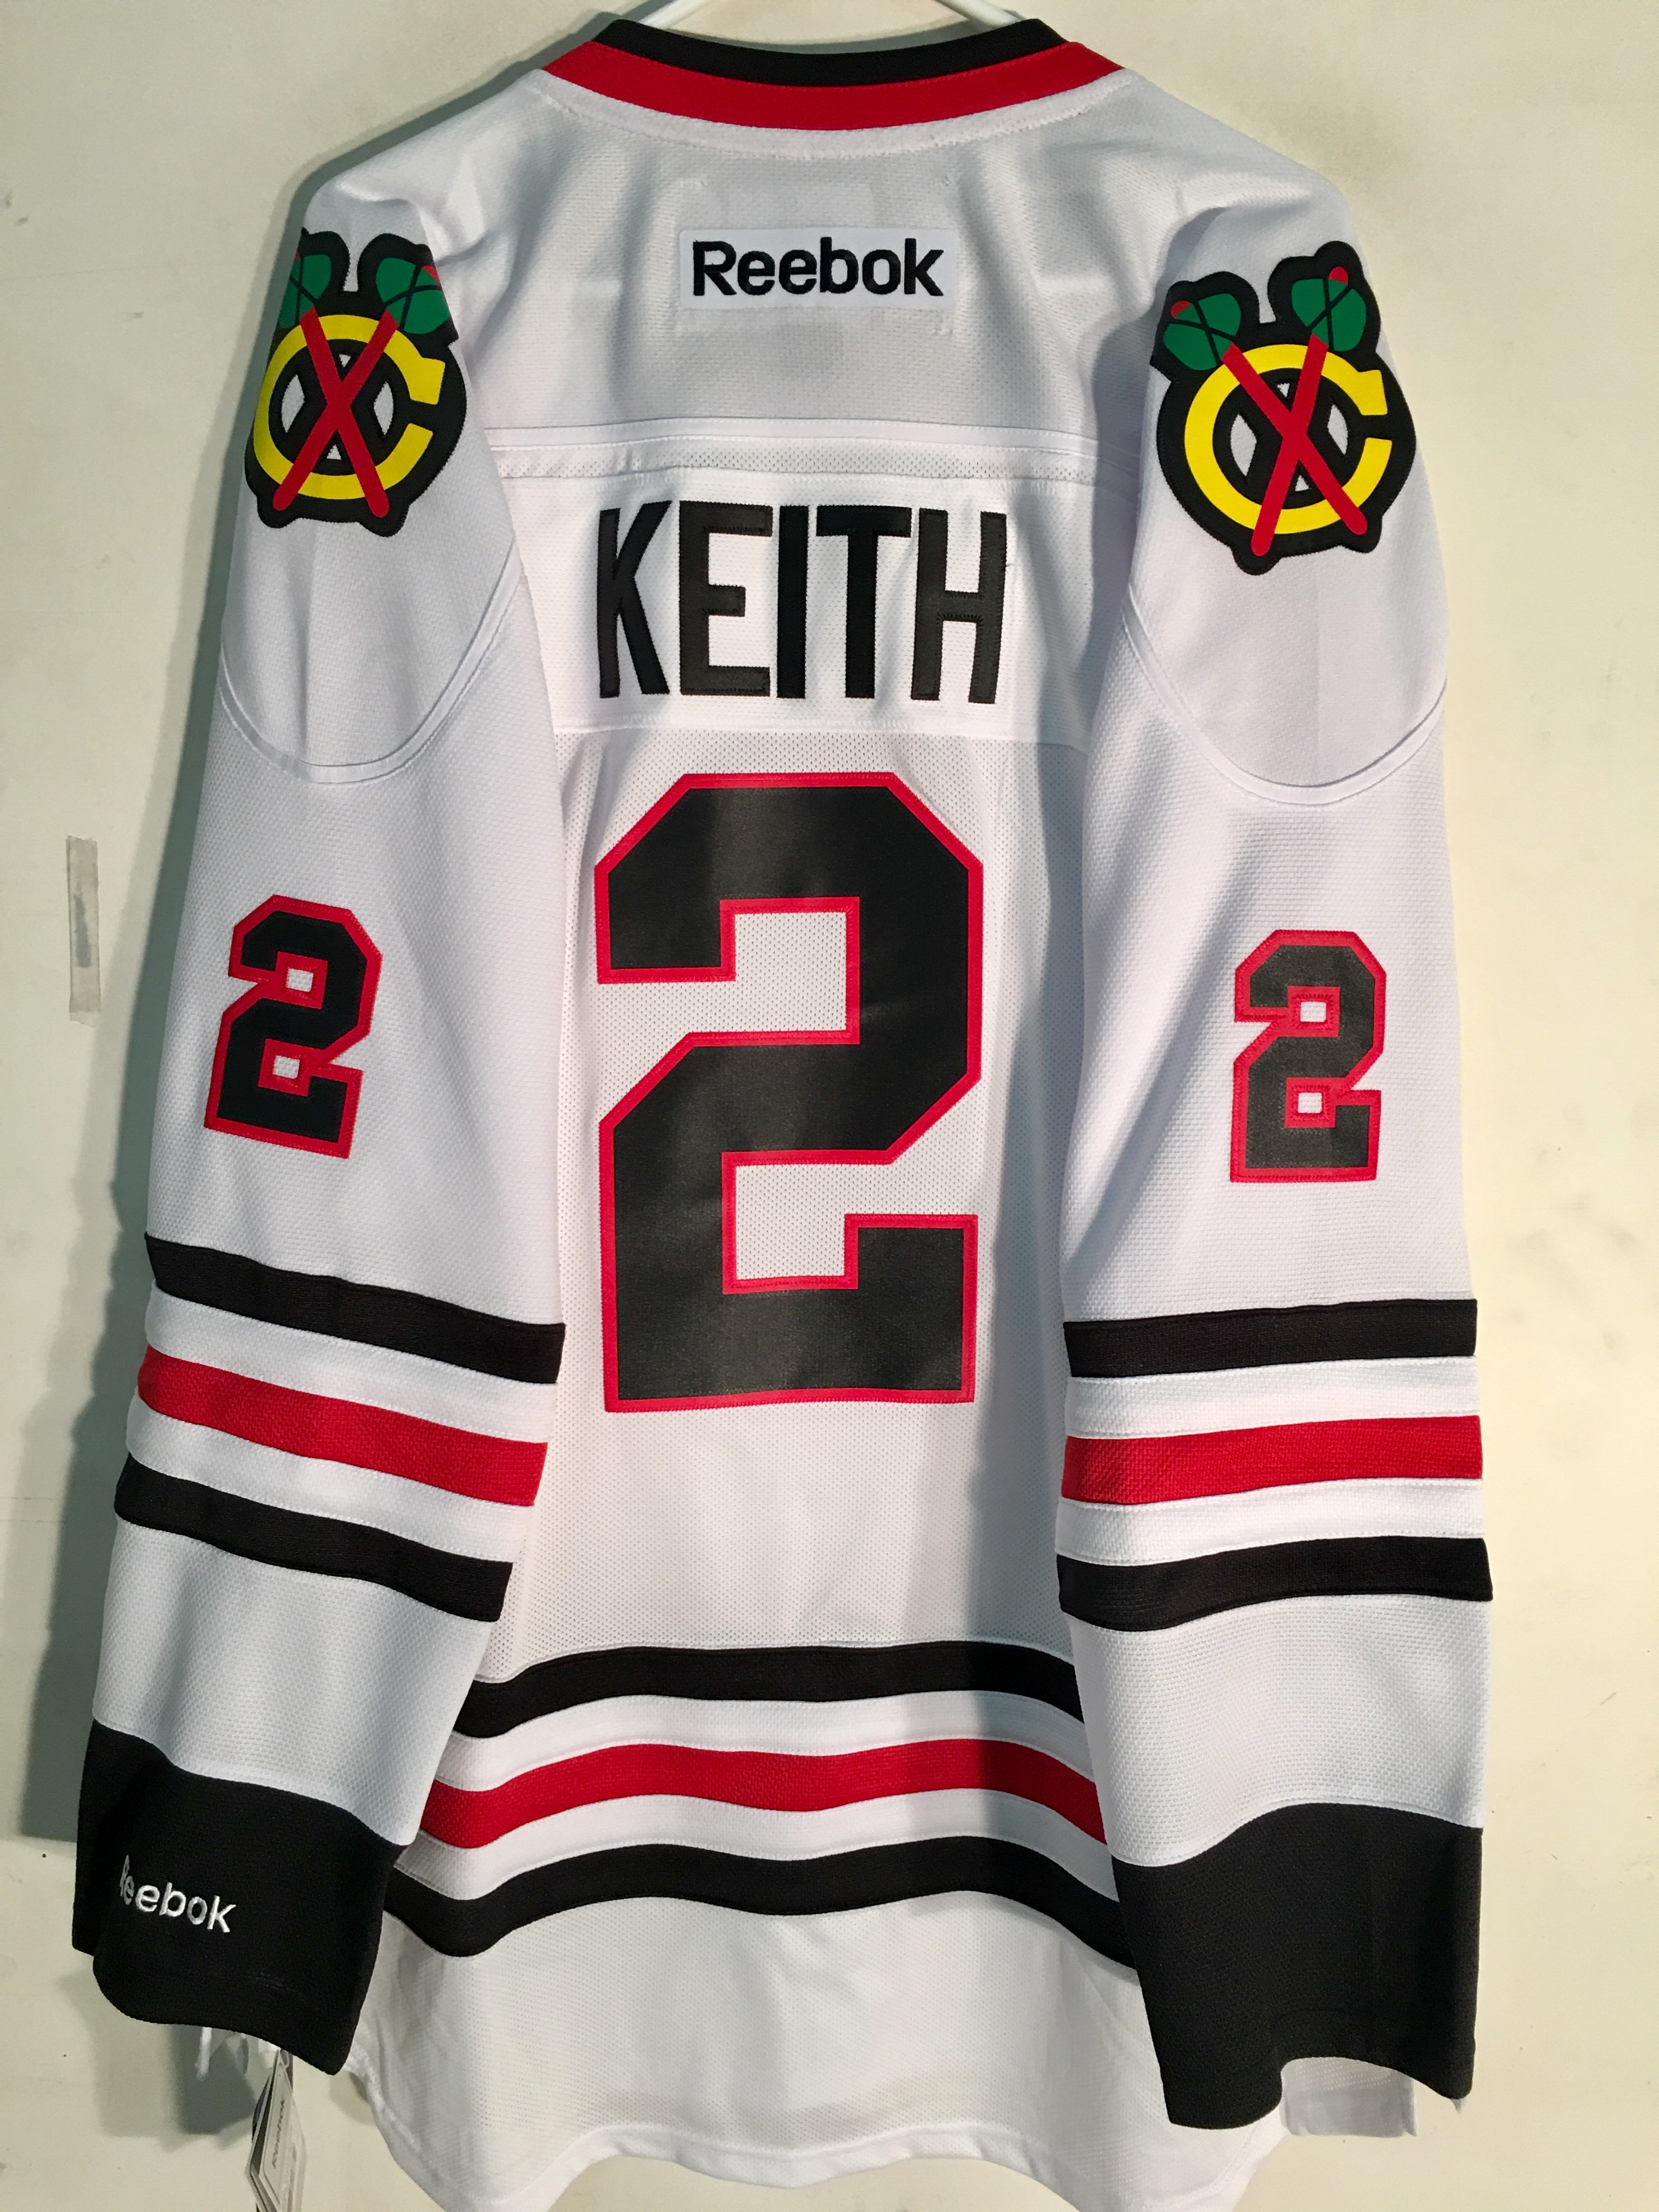 chicago blackhawks keith jersey